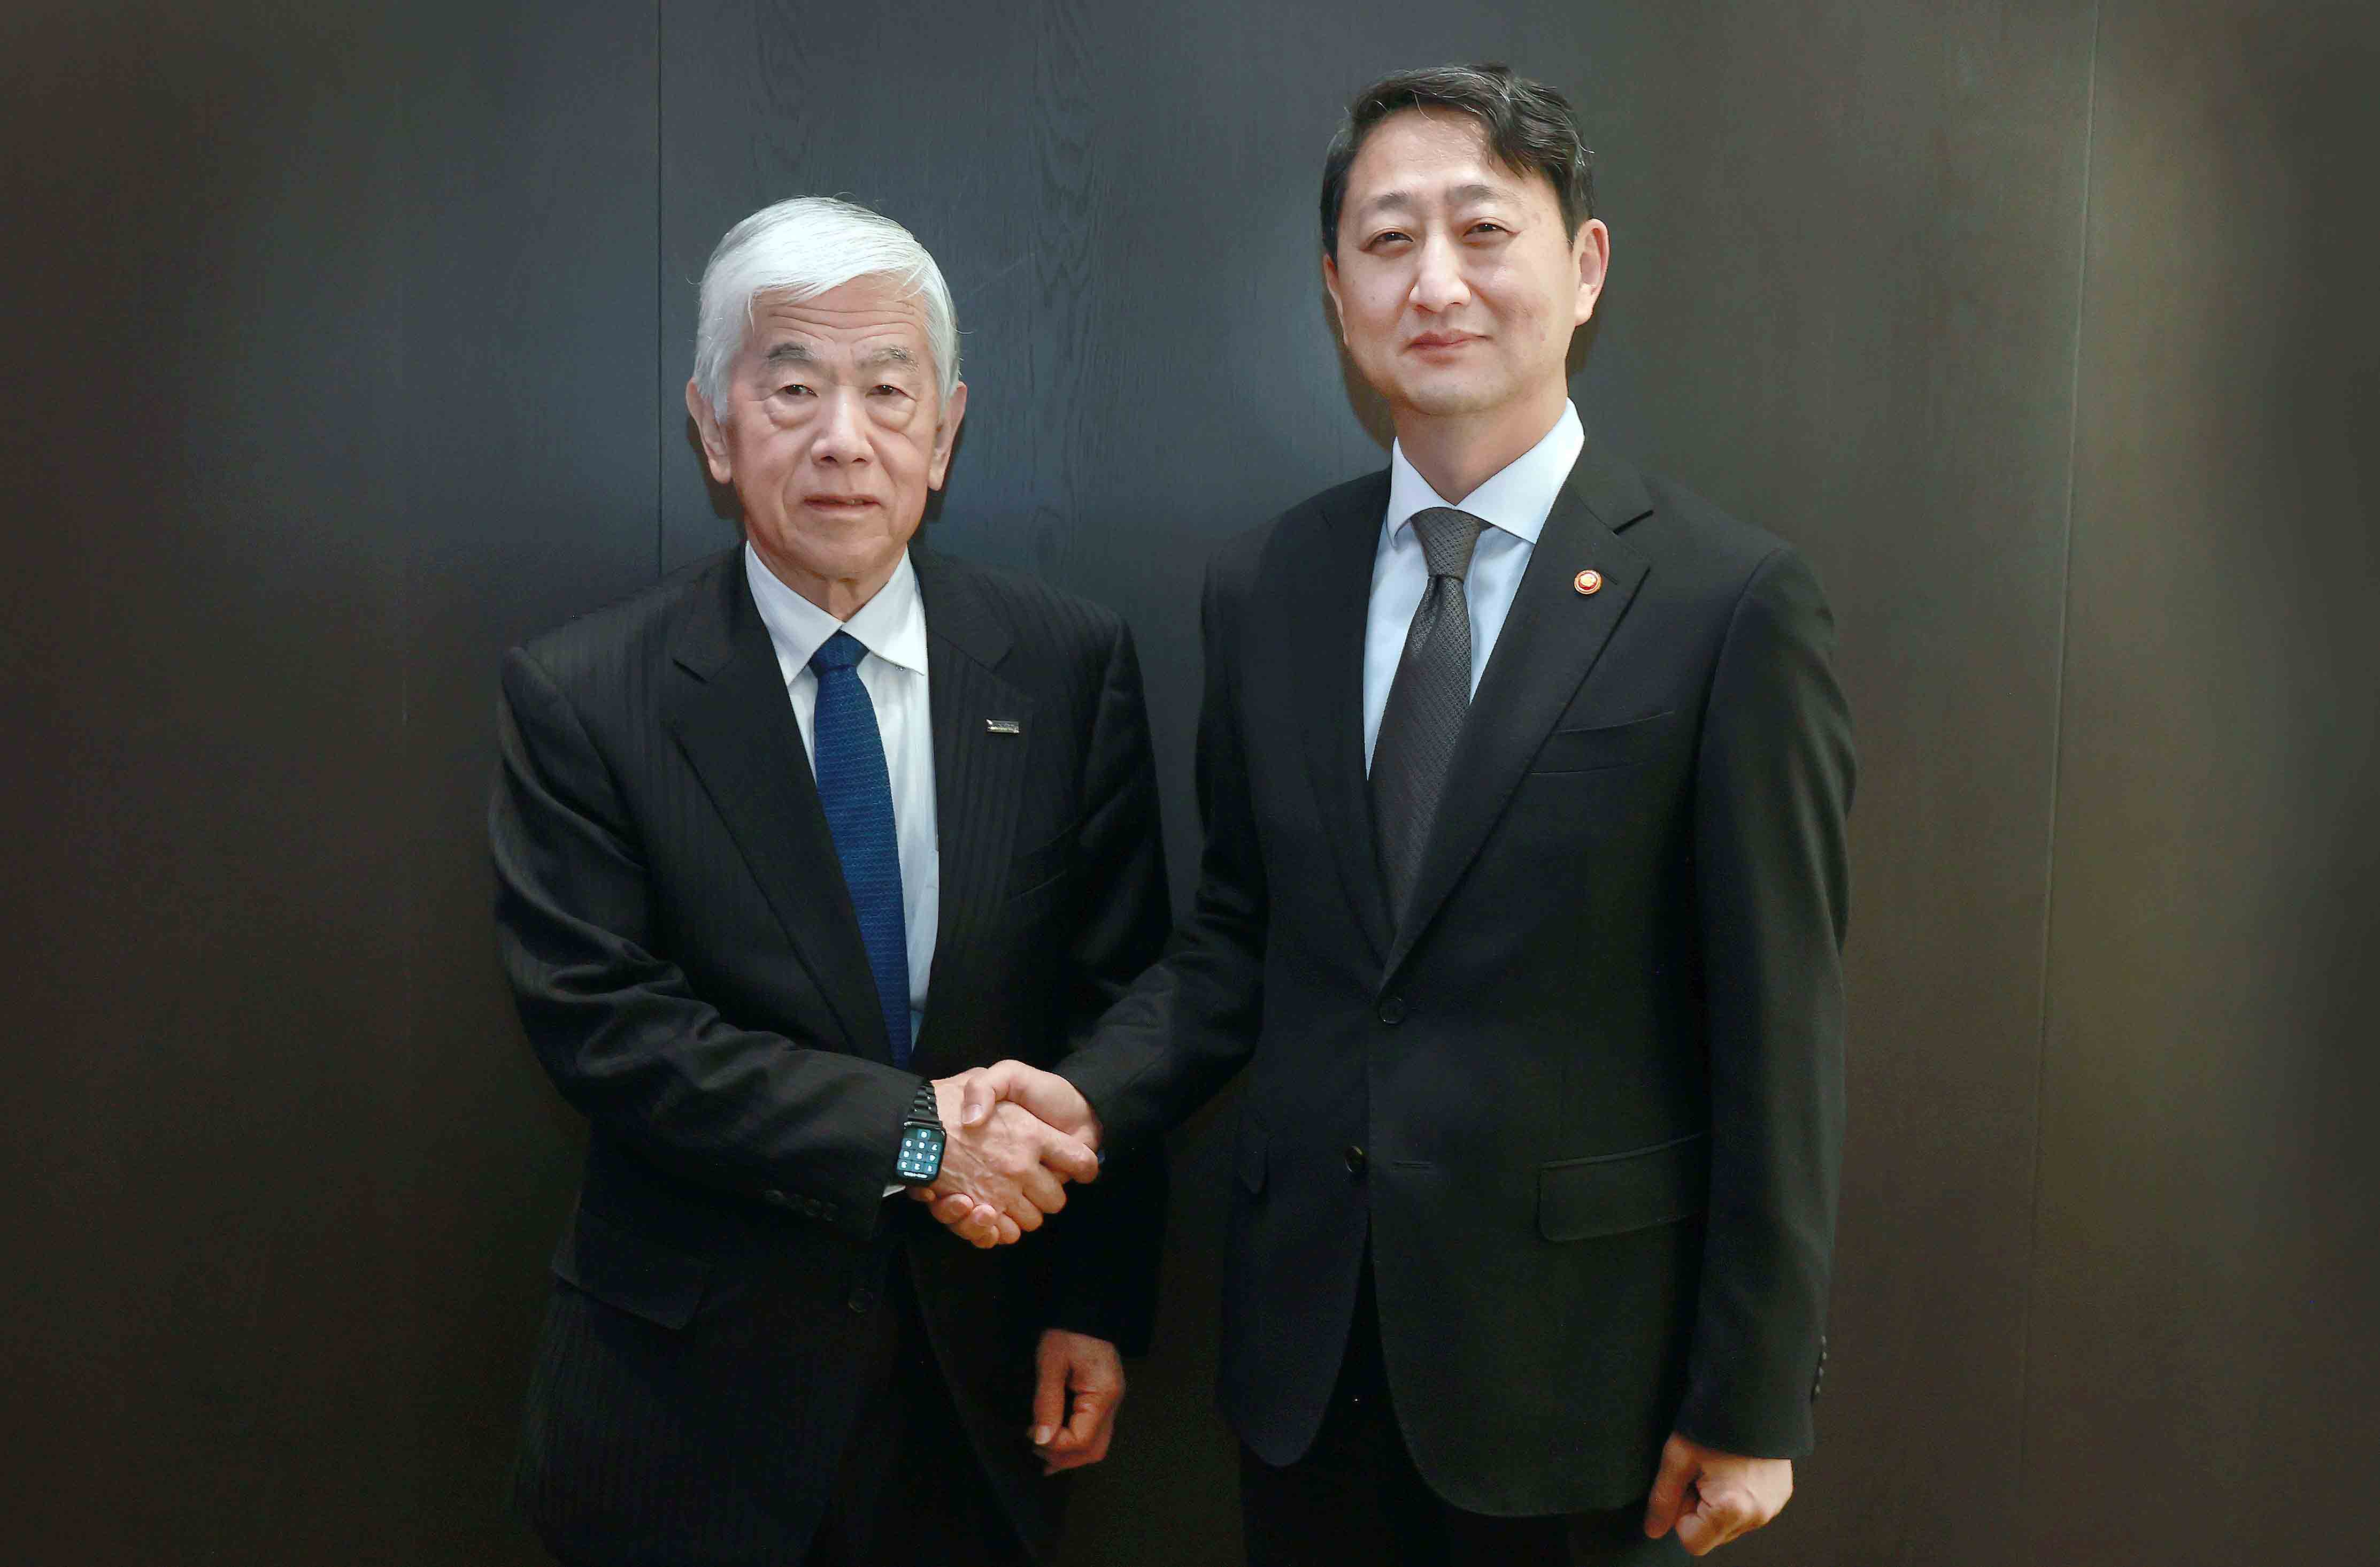 Minister Ahn meets Toray Industries CEO